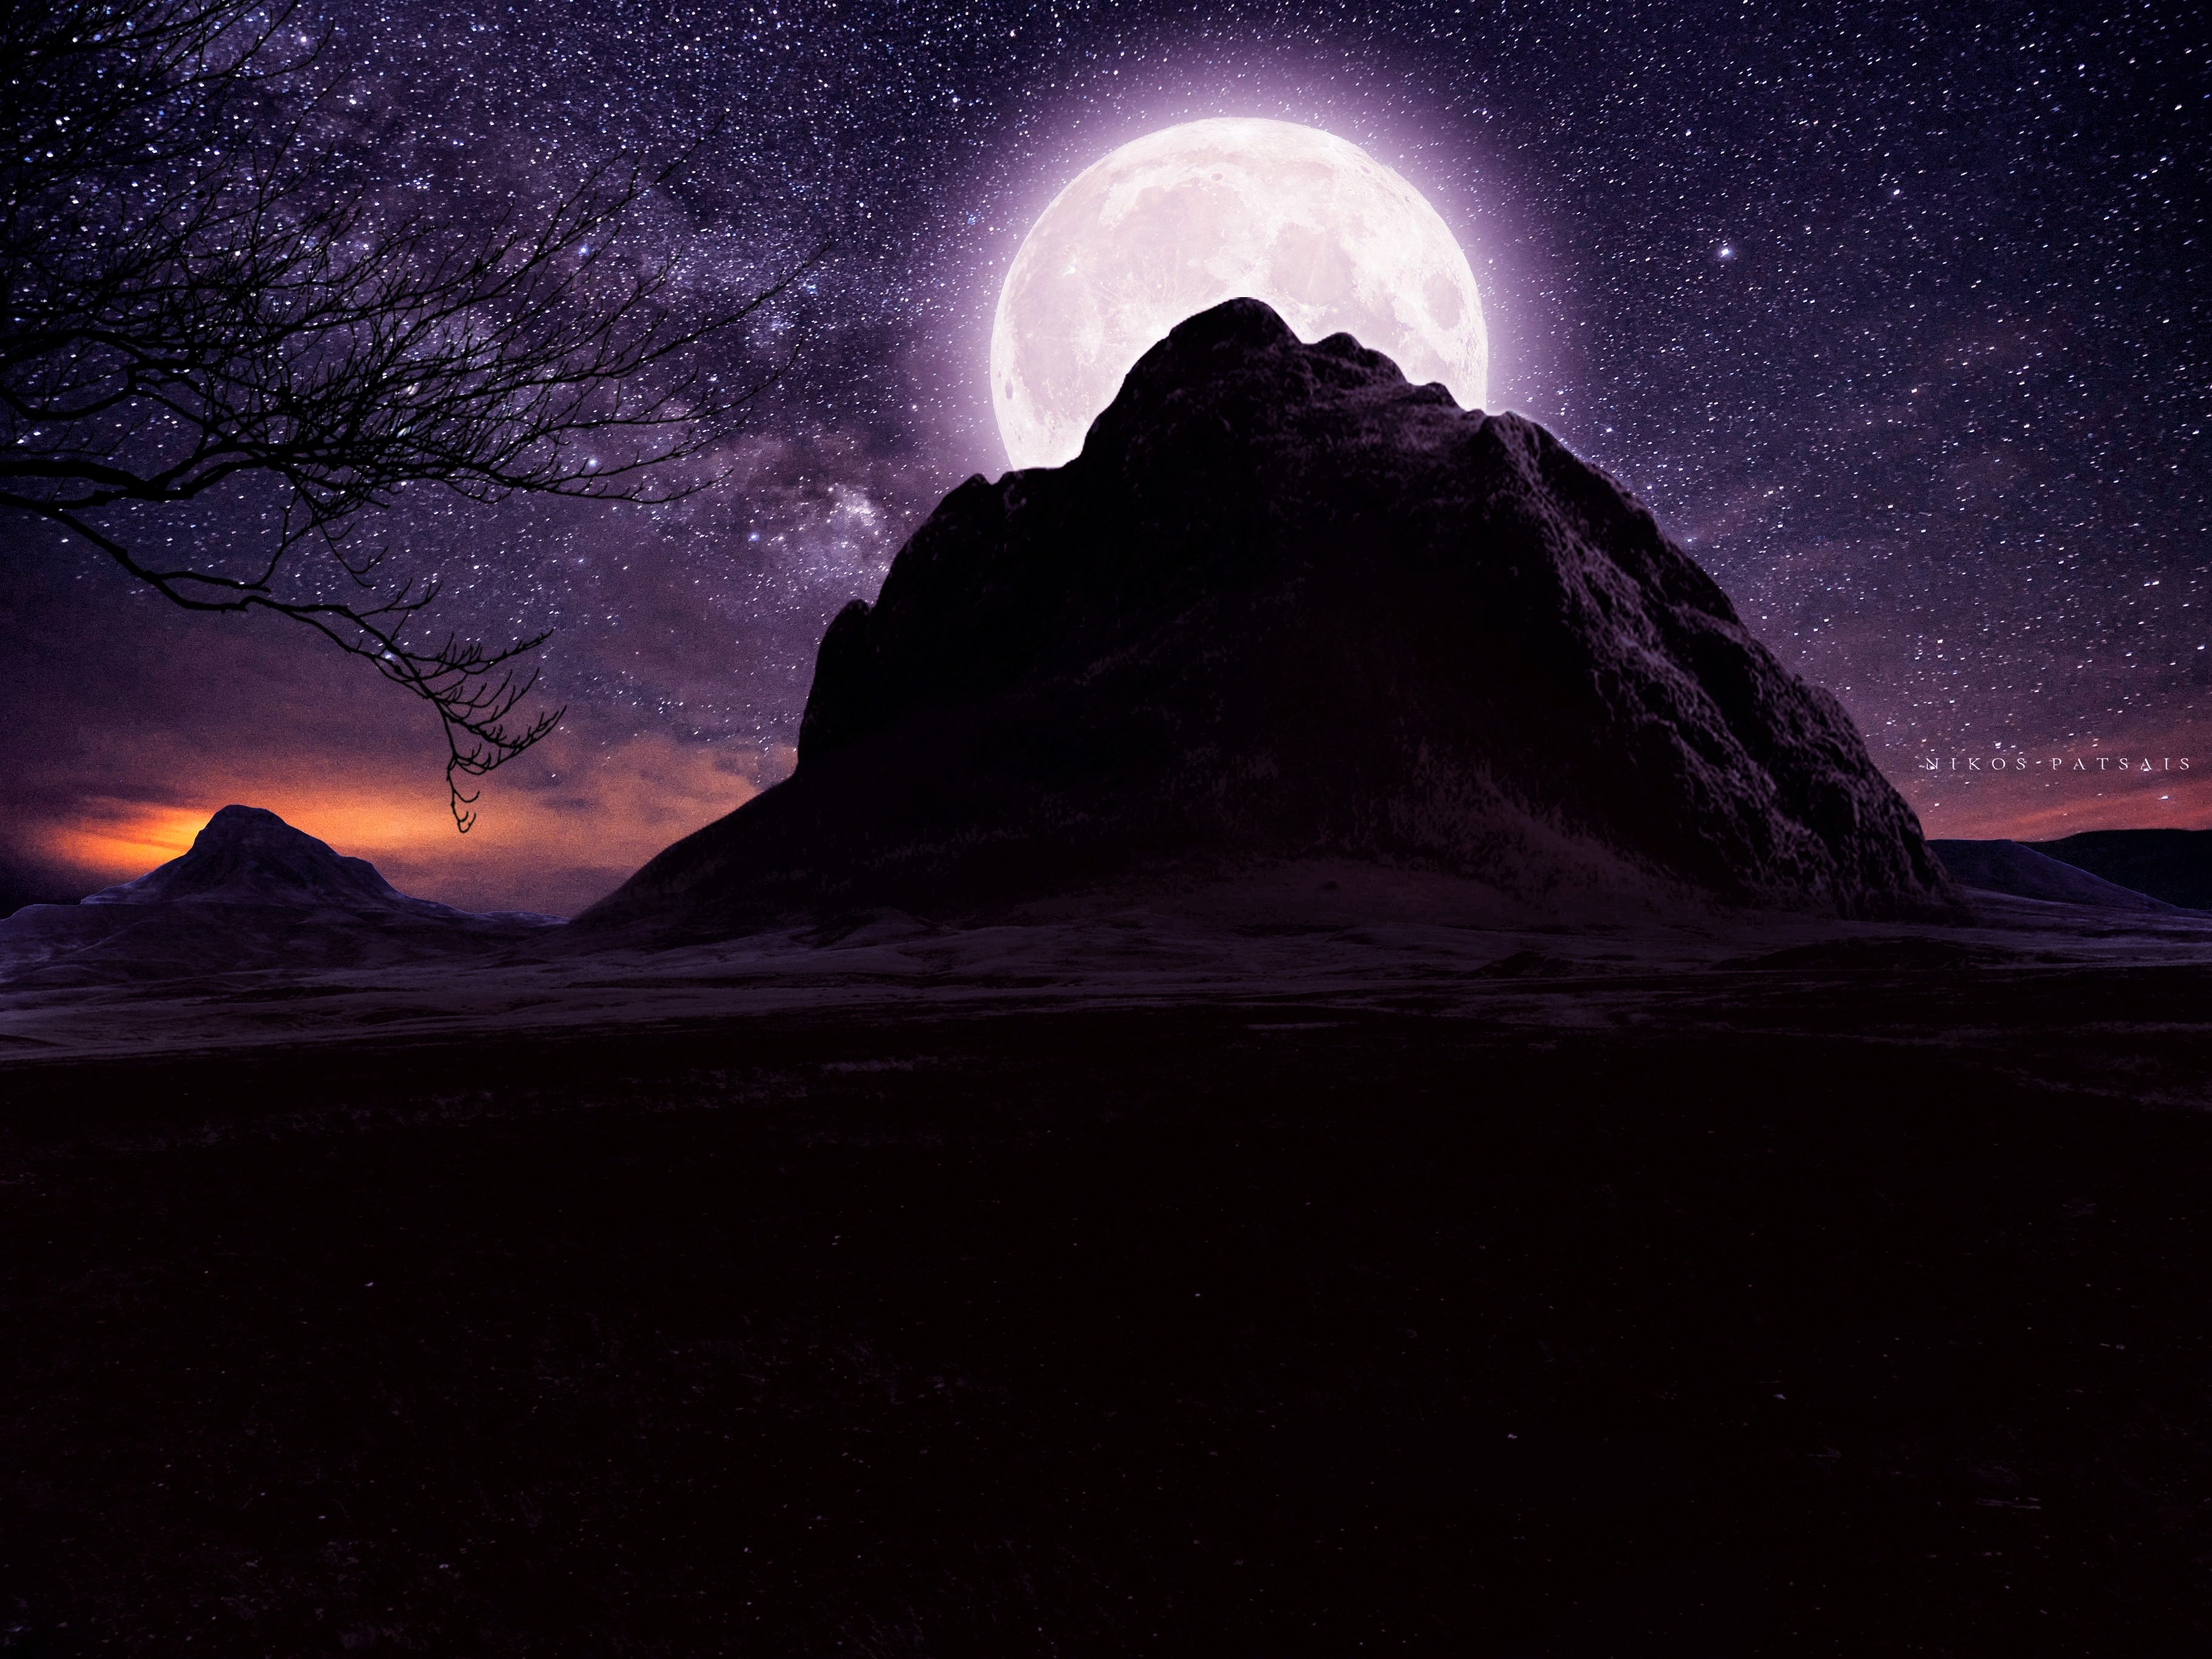 360x360 Resolution Full Moon Over Mountain On Starry Night 360x360